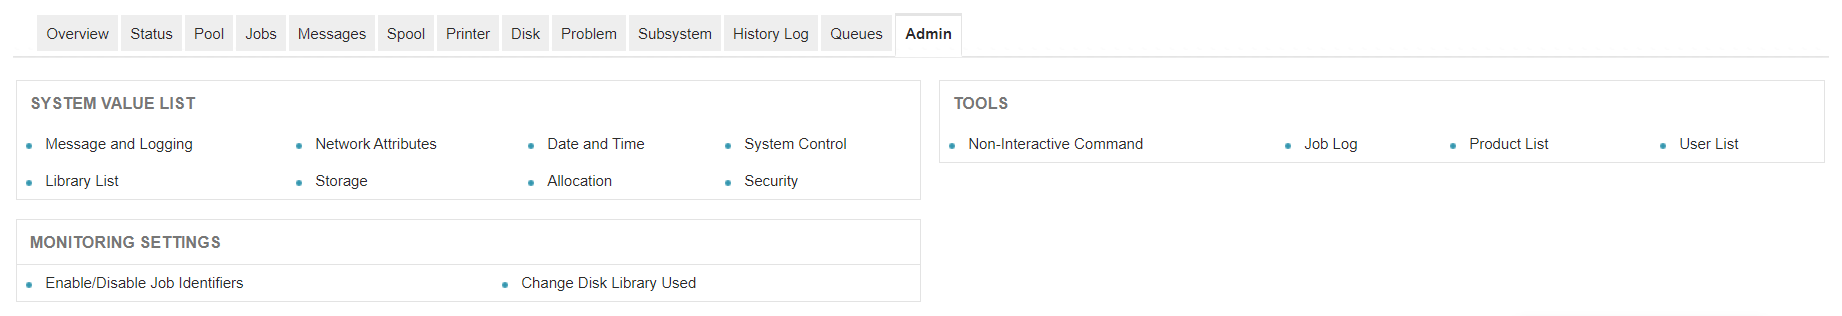 IBM i Server Monitoring Tools - ManageEngine Applications Manager